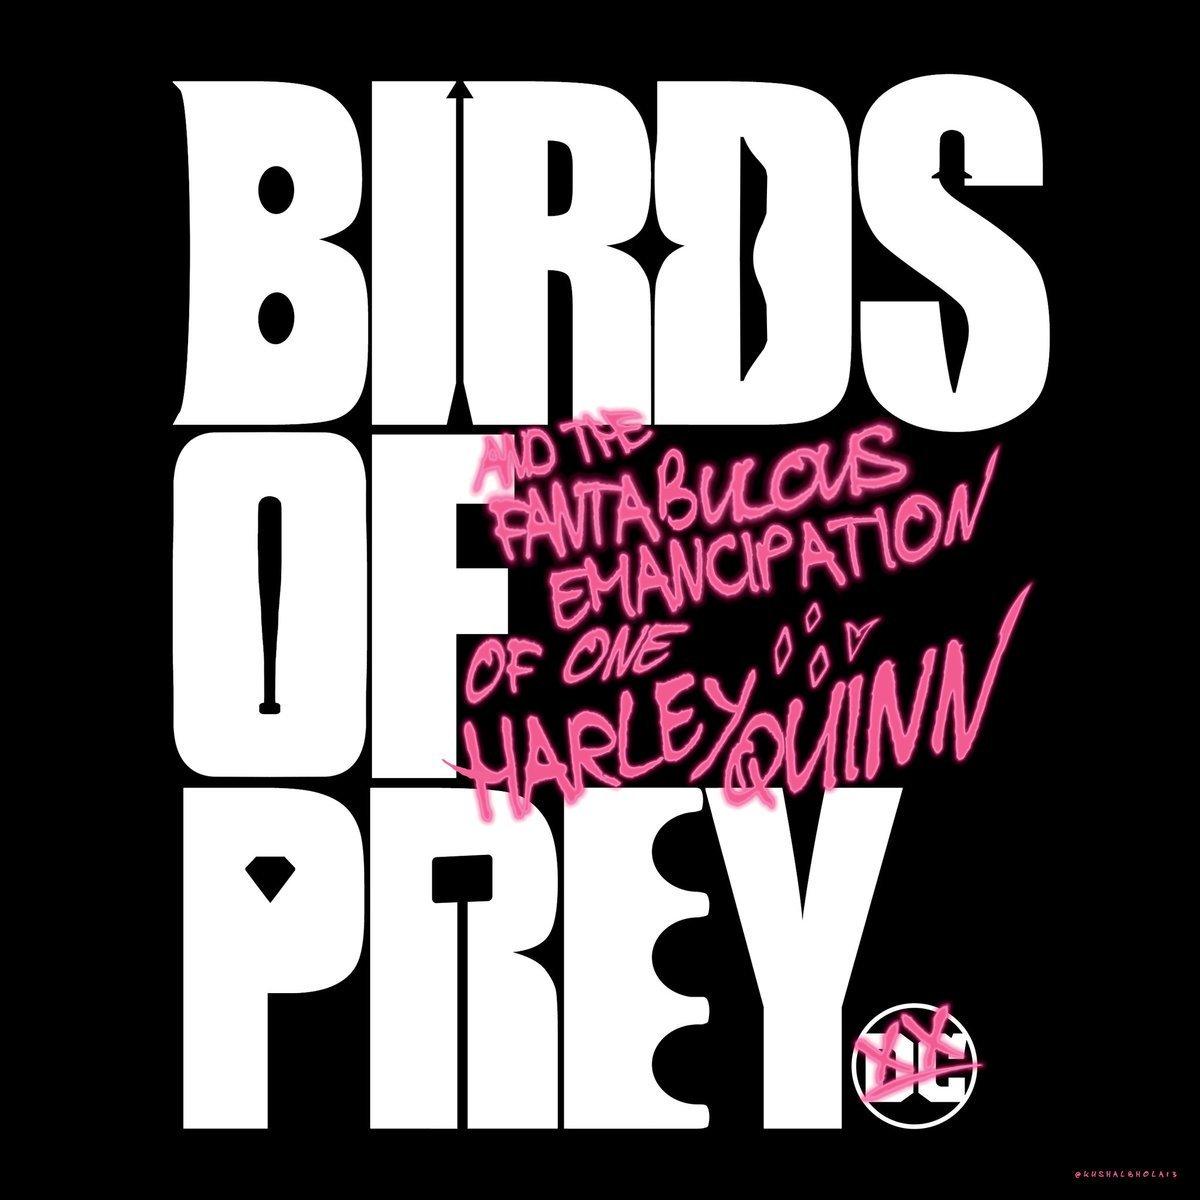 Harley Quinn Hijacks the Official Logo for 'Birds of Prey